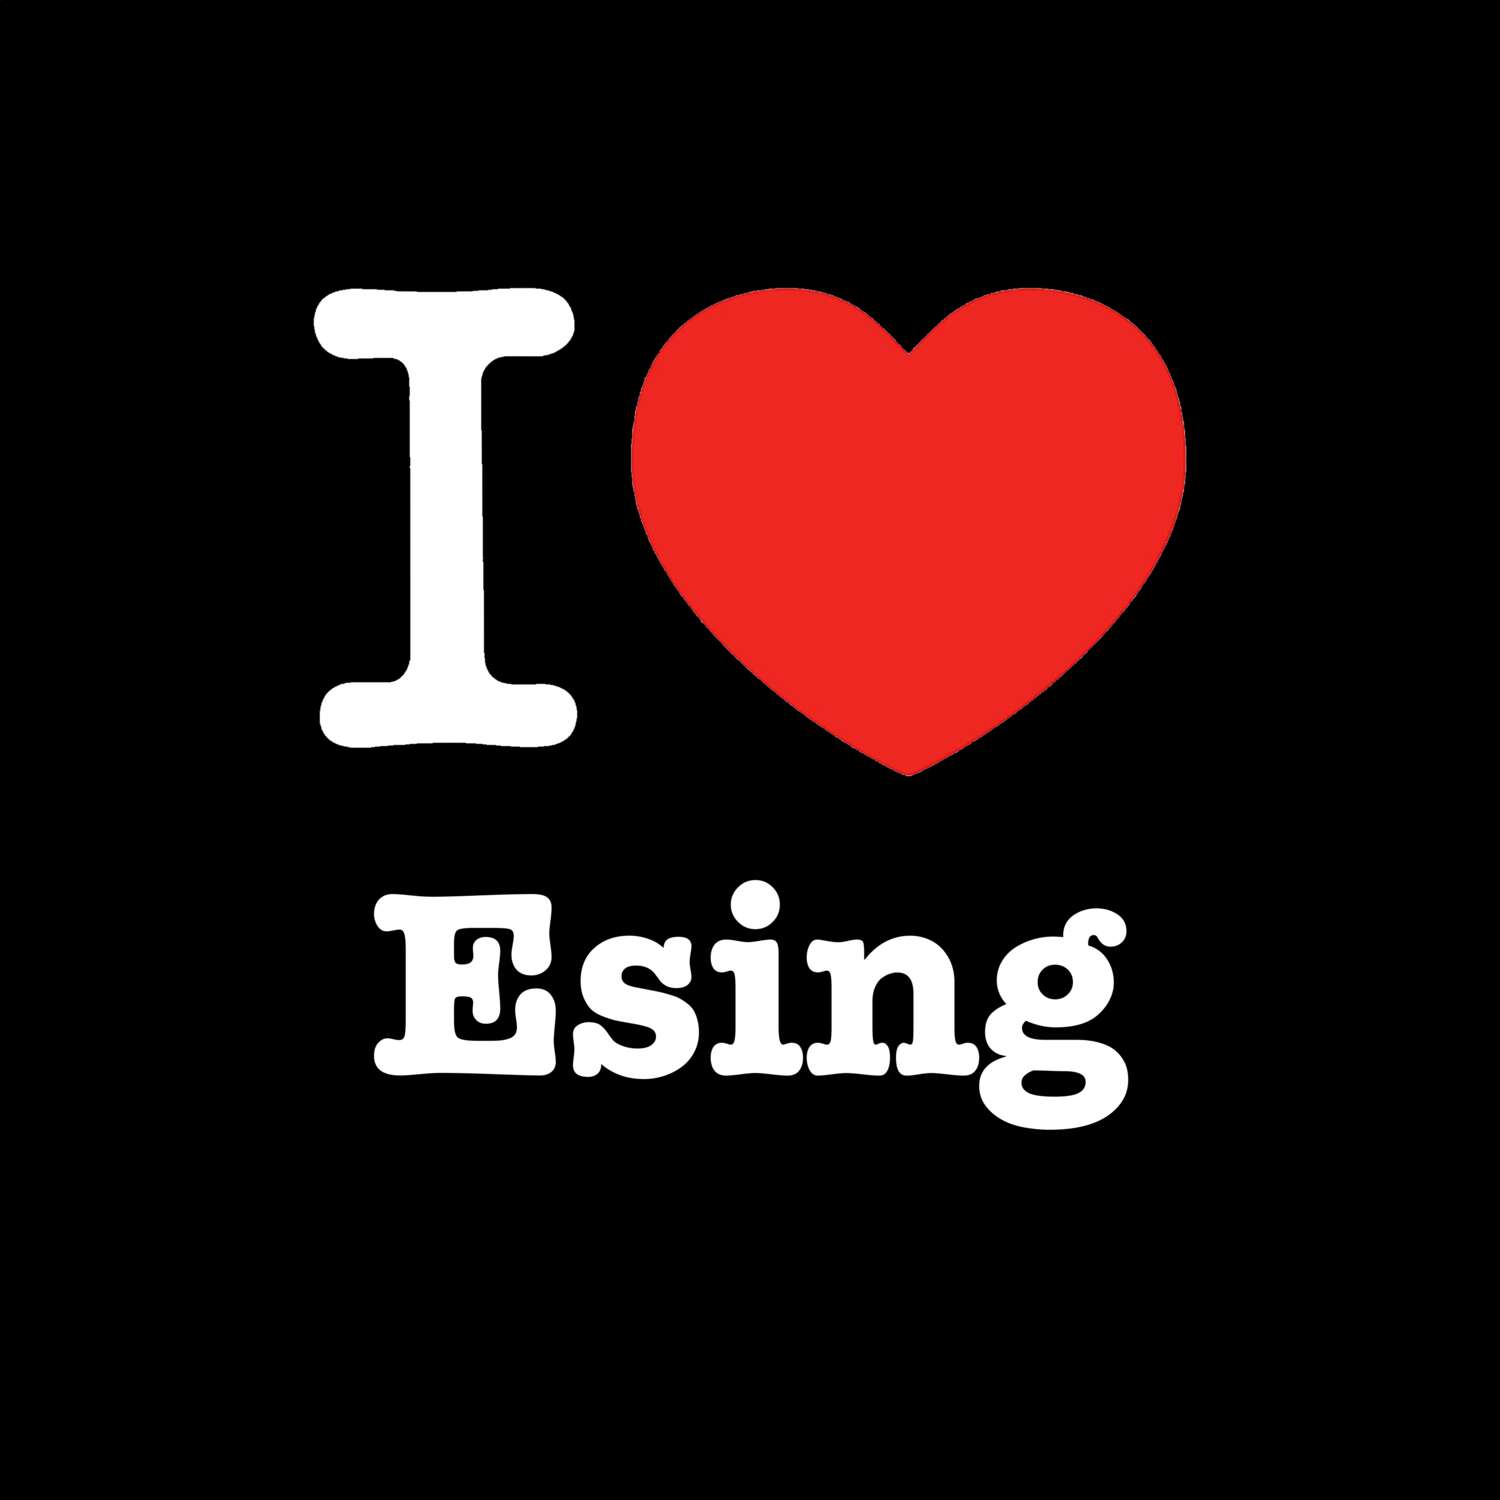 Esing T-Shirt »I love«